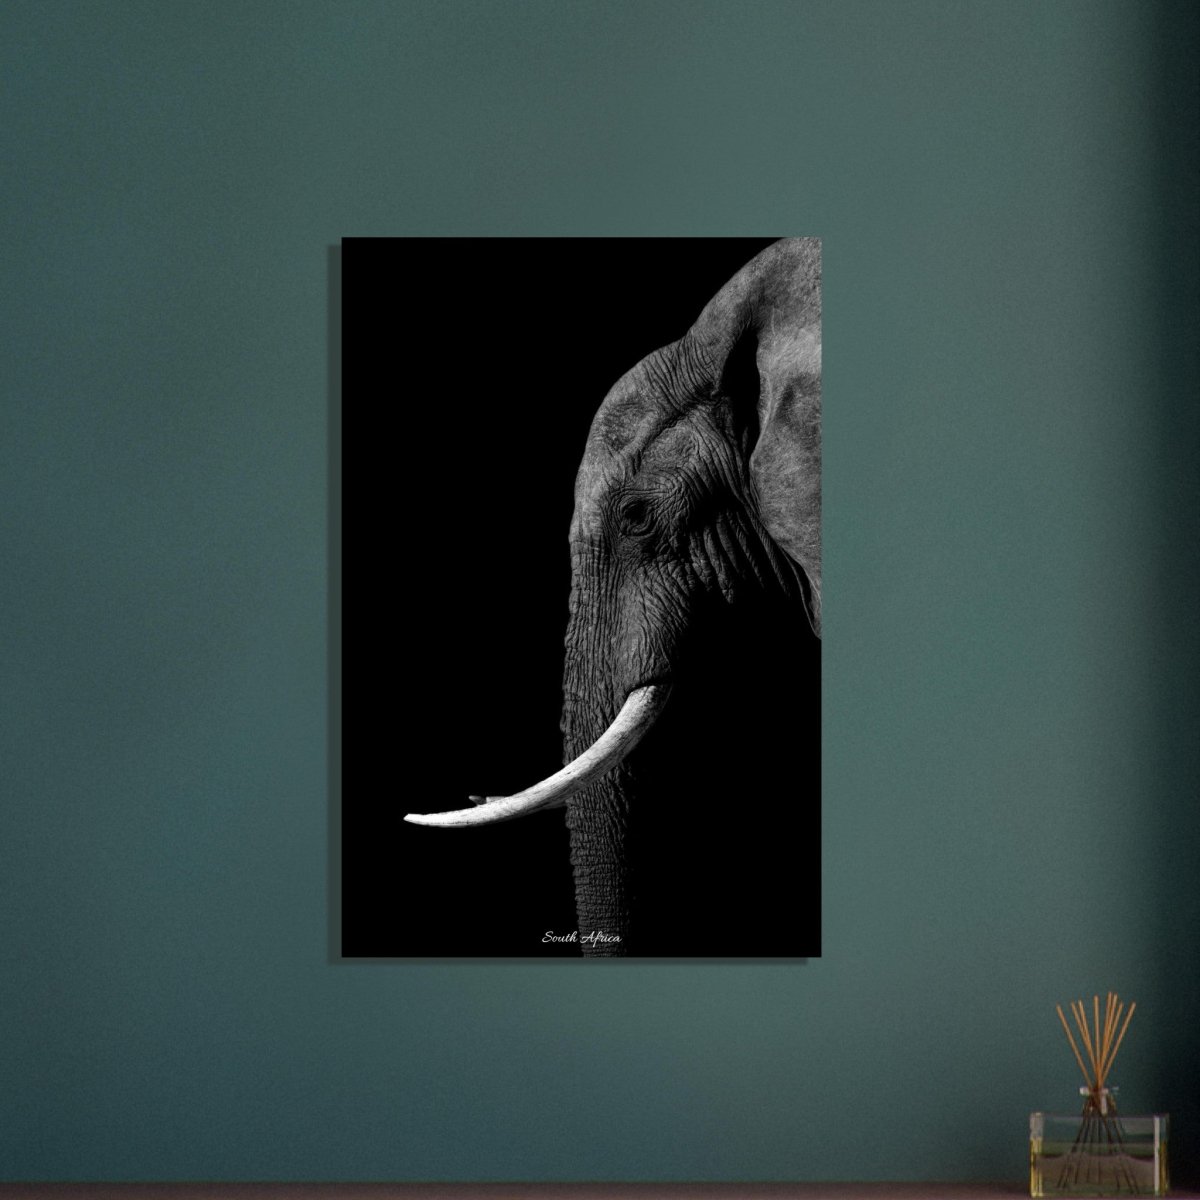 60x90 cm / 24x36″ Black & White Elephant portrait by Picture This